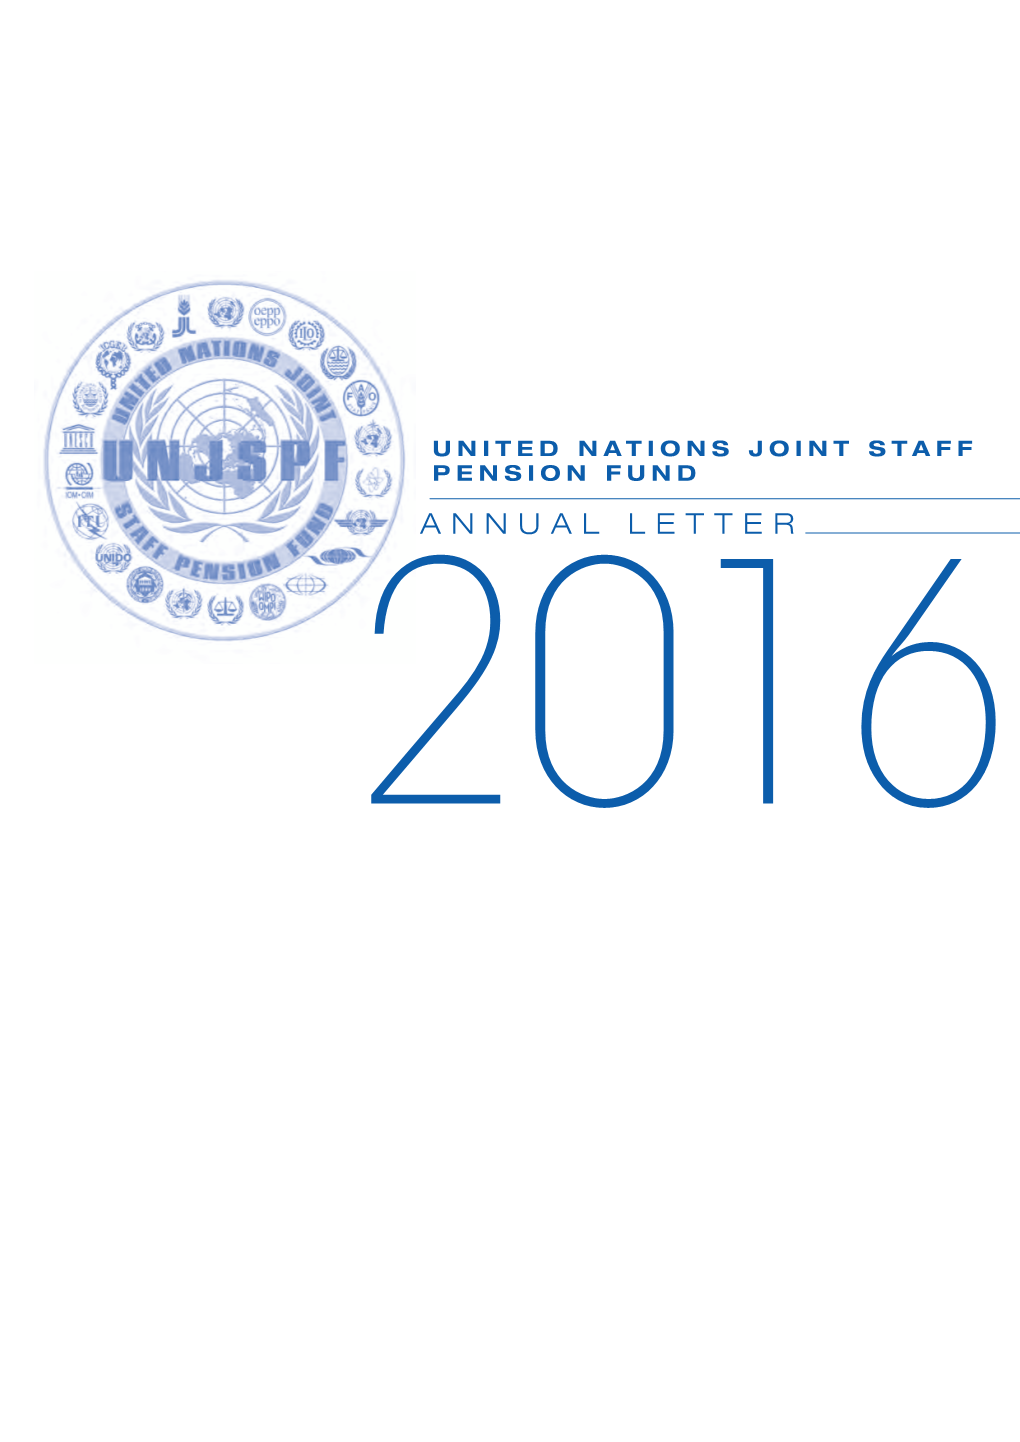 Annual Letter 2016 Unjspf 1